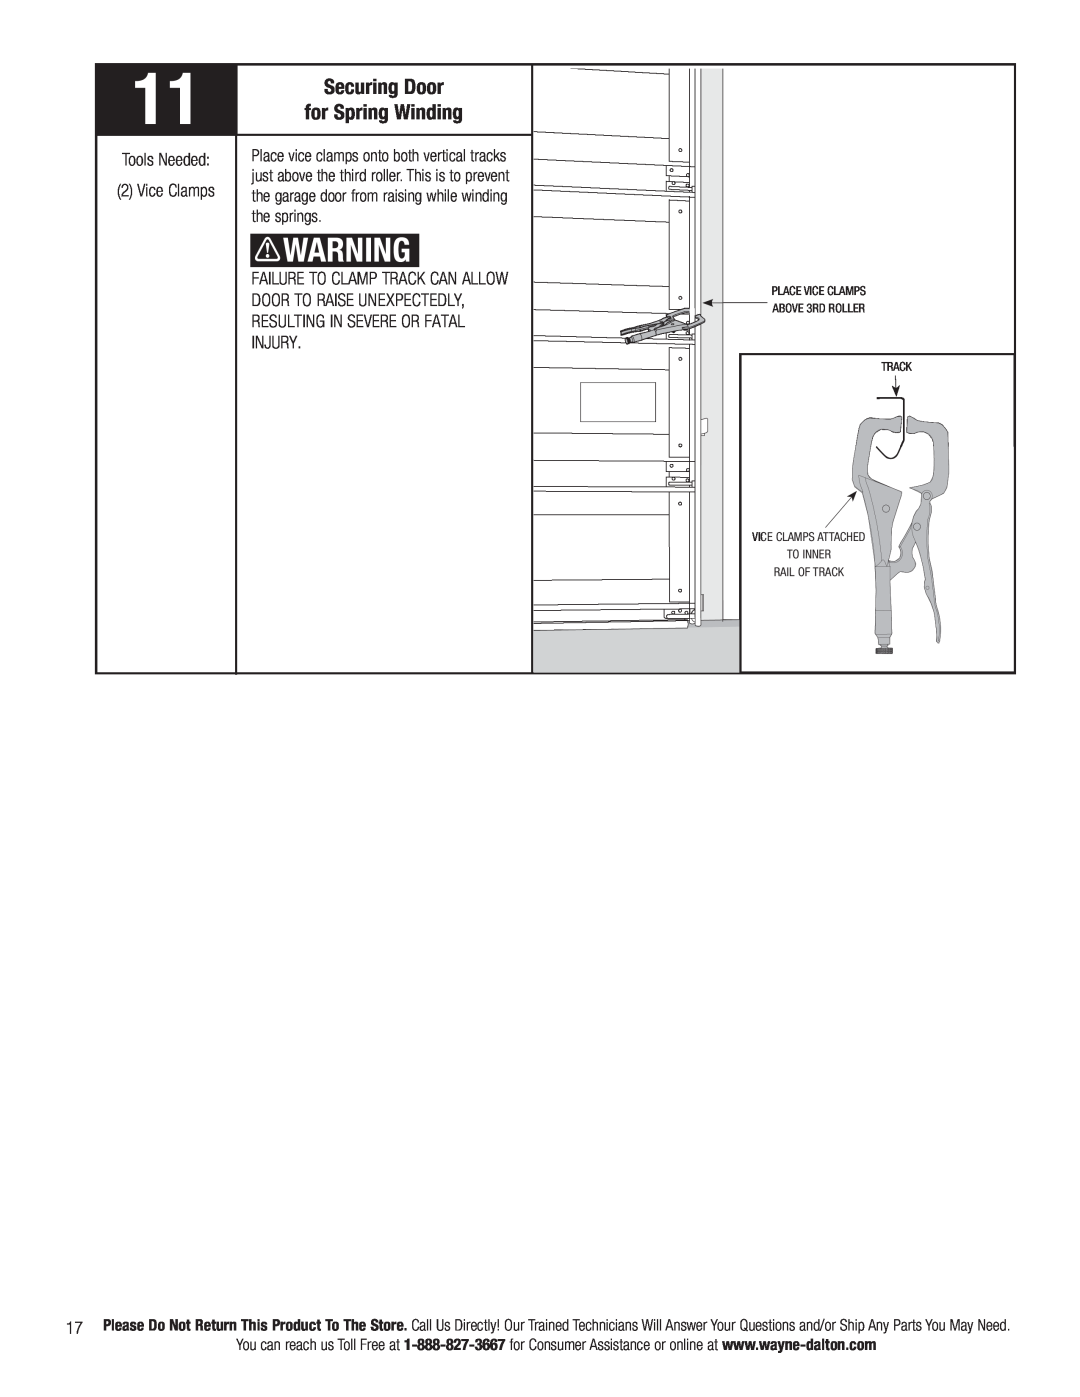 Wayne-Dalton 3663-372 installation instructions Securing Door, for Spring Winding 